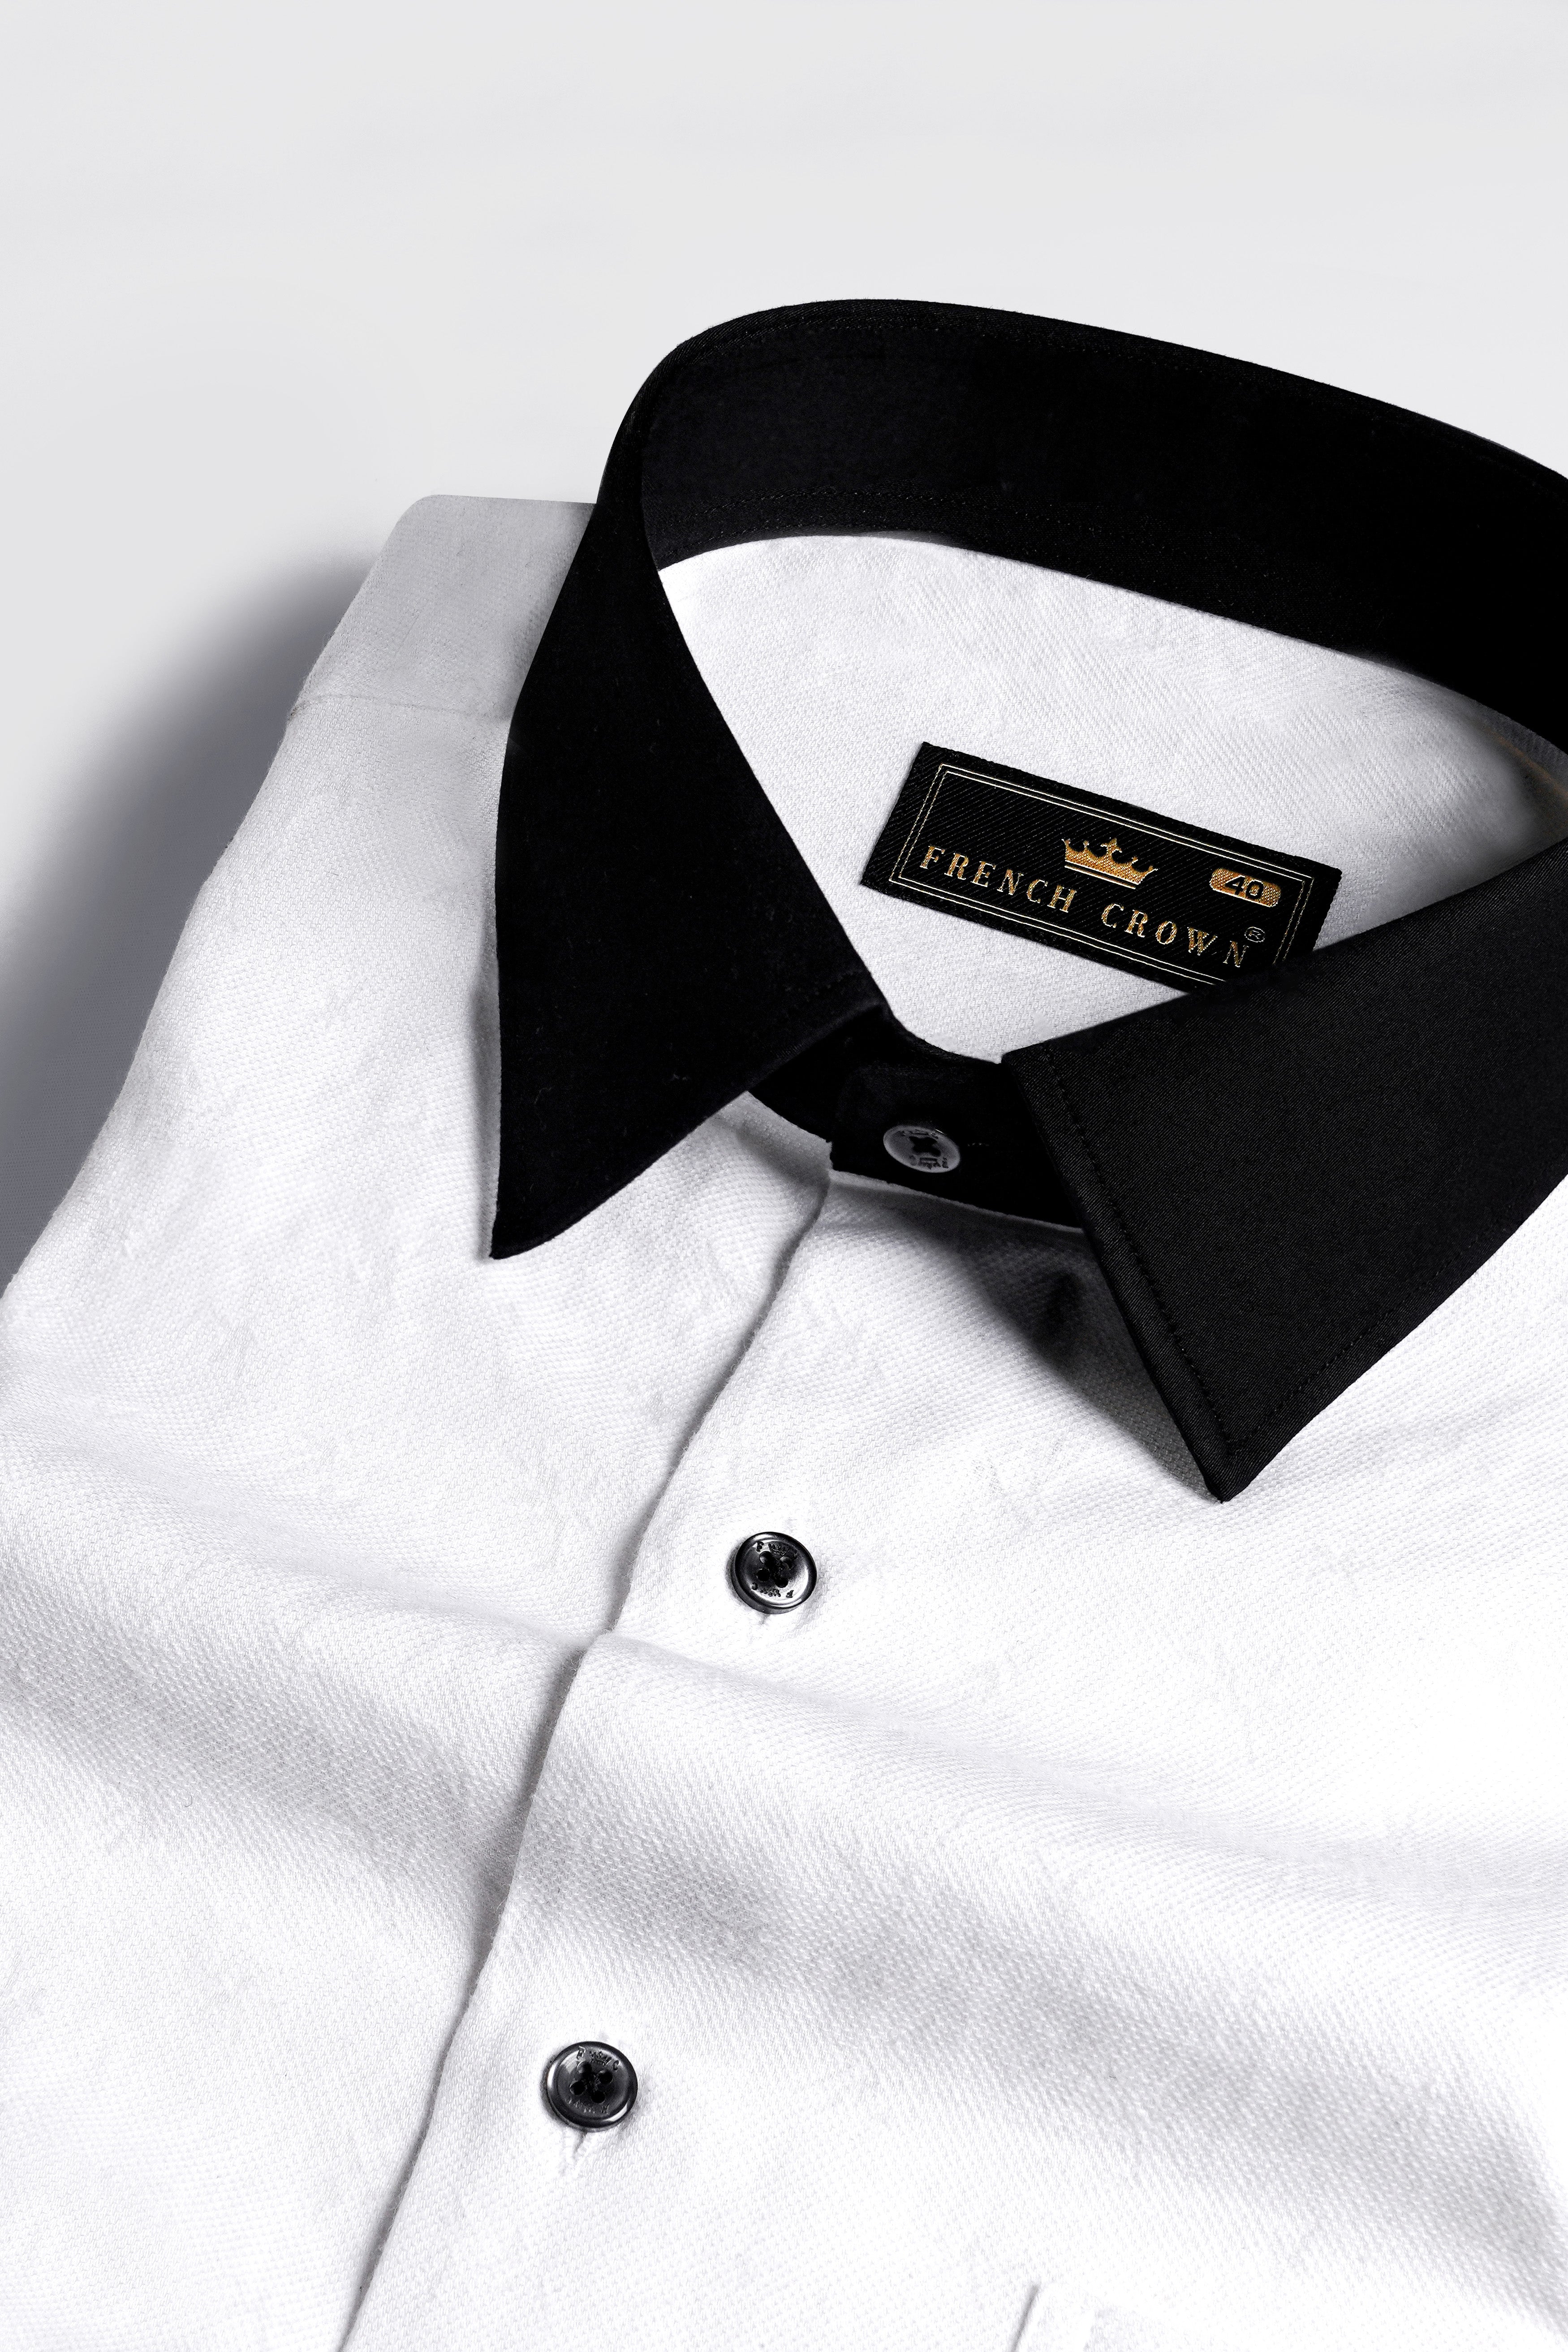 Bright White Jacquard Textured Premium Giza Cotton Shirt with Black Collar and Cuffs